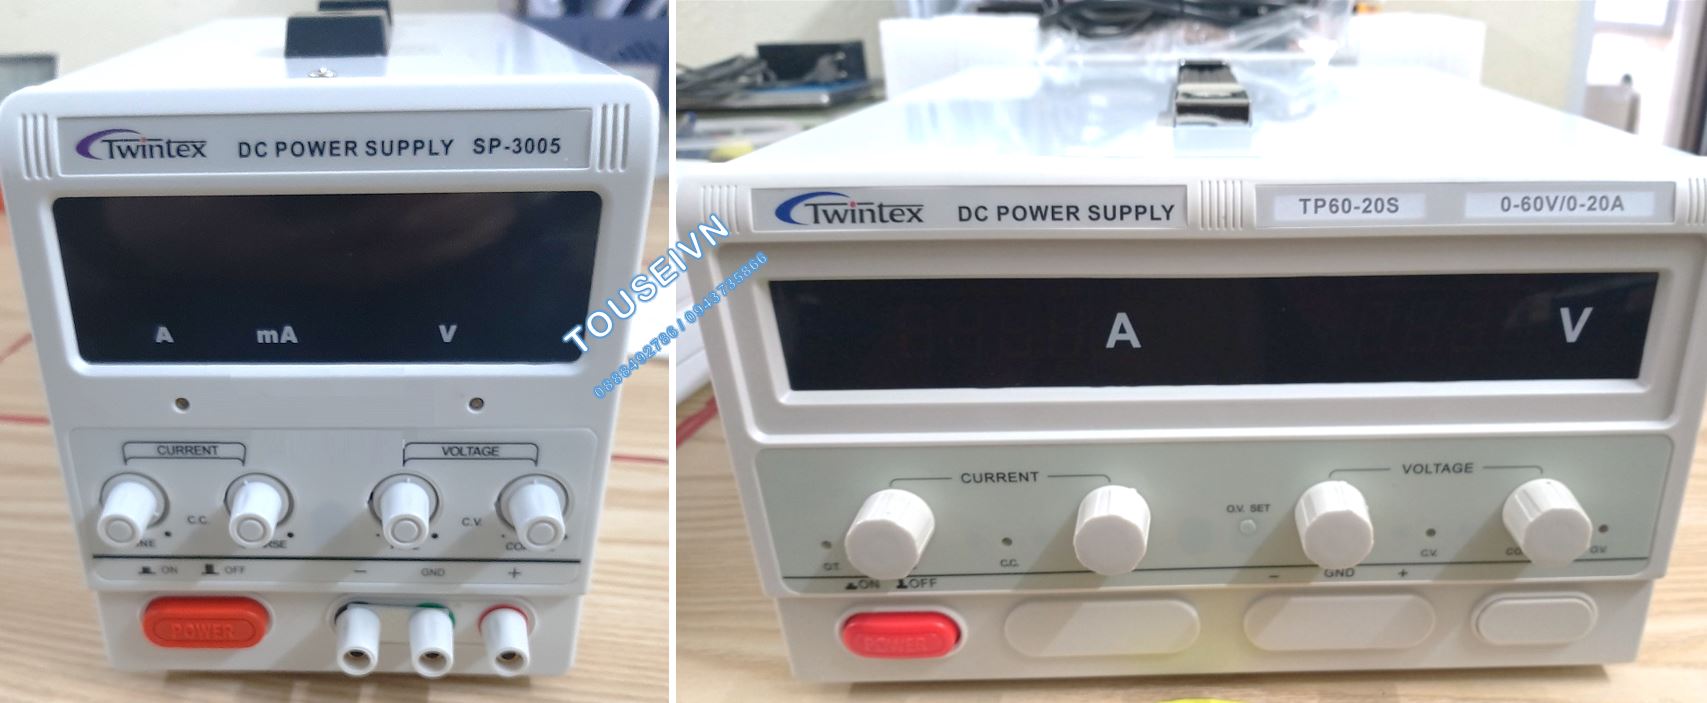 Thiết bị cấp nguồn DC Power Supply SP-3010 Twintex 3